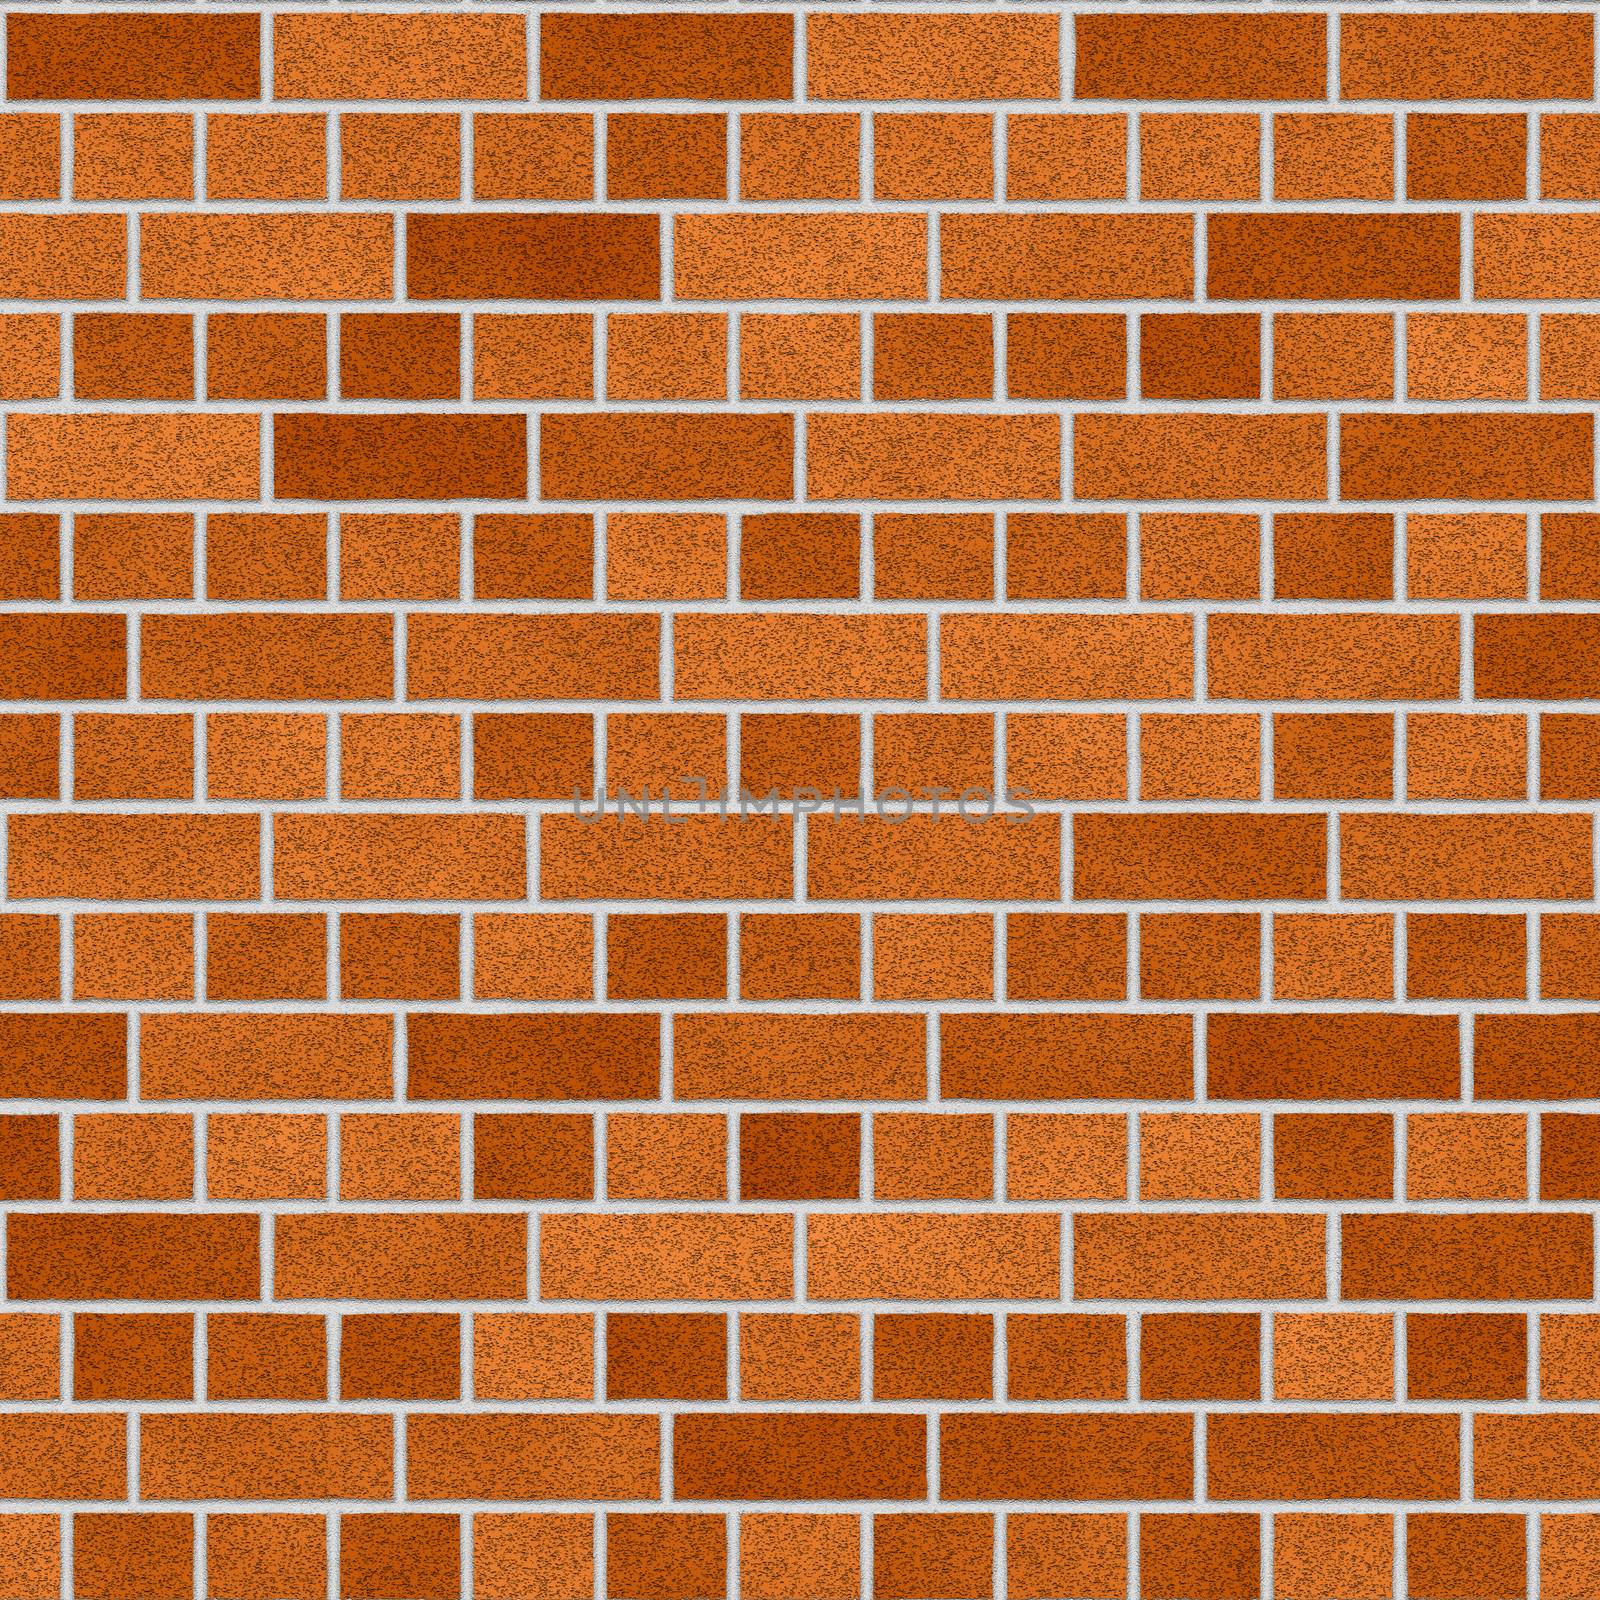 Orange Dutch Clay Brick Wall Seamless Texture by whitechild